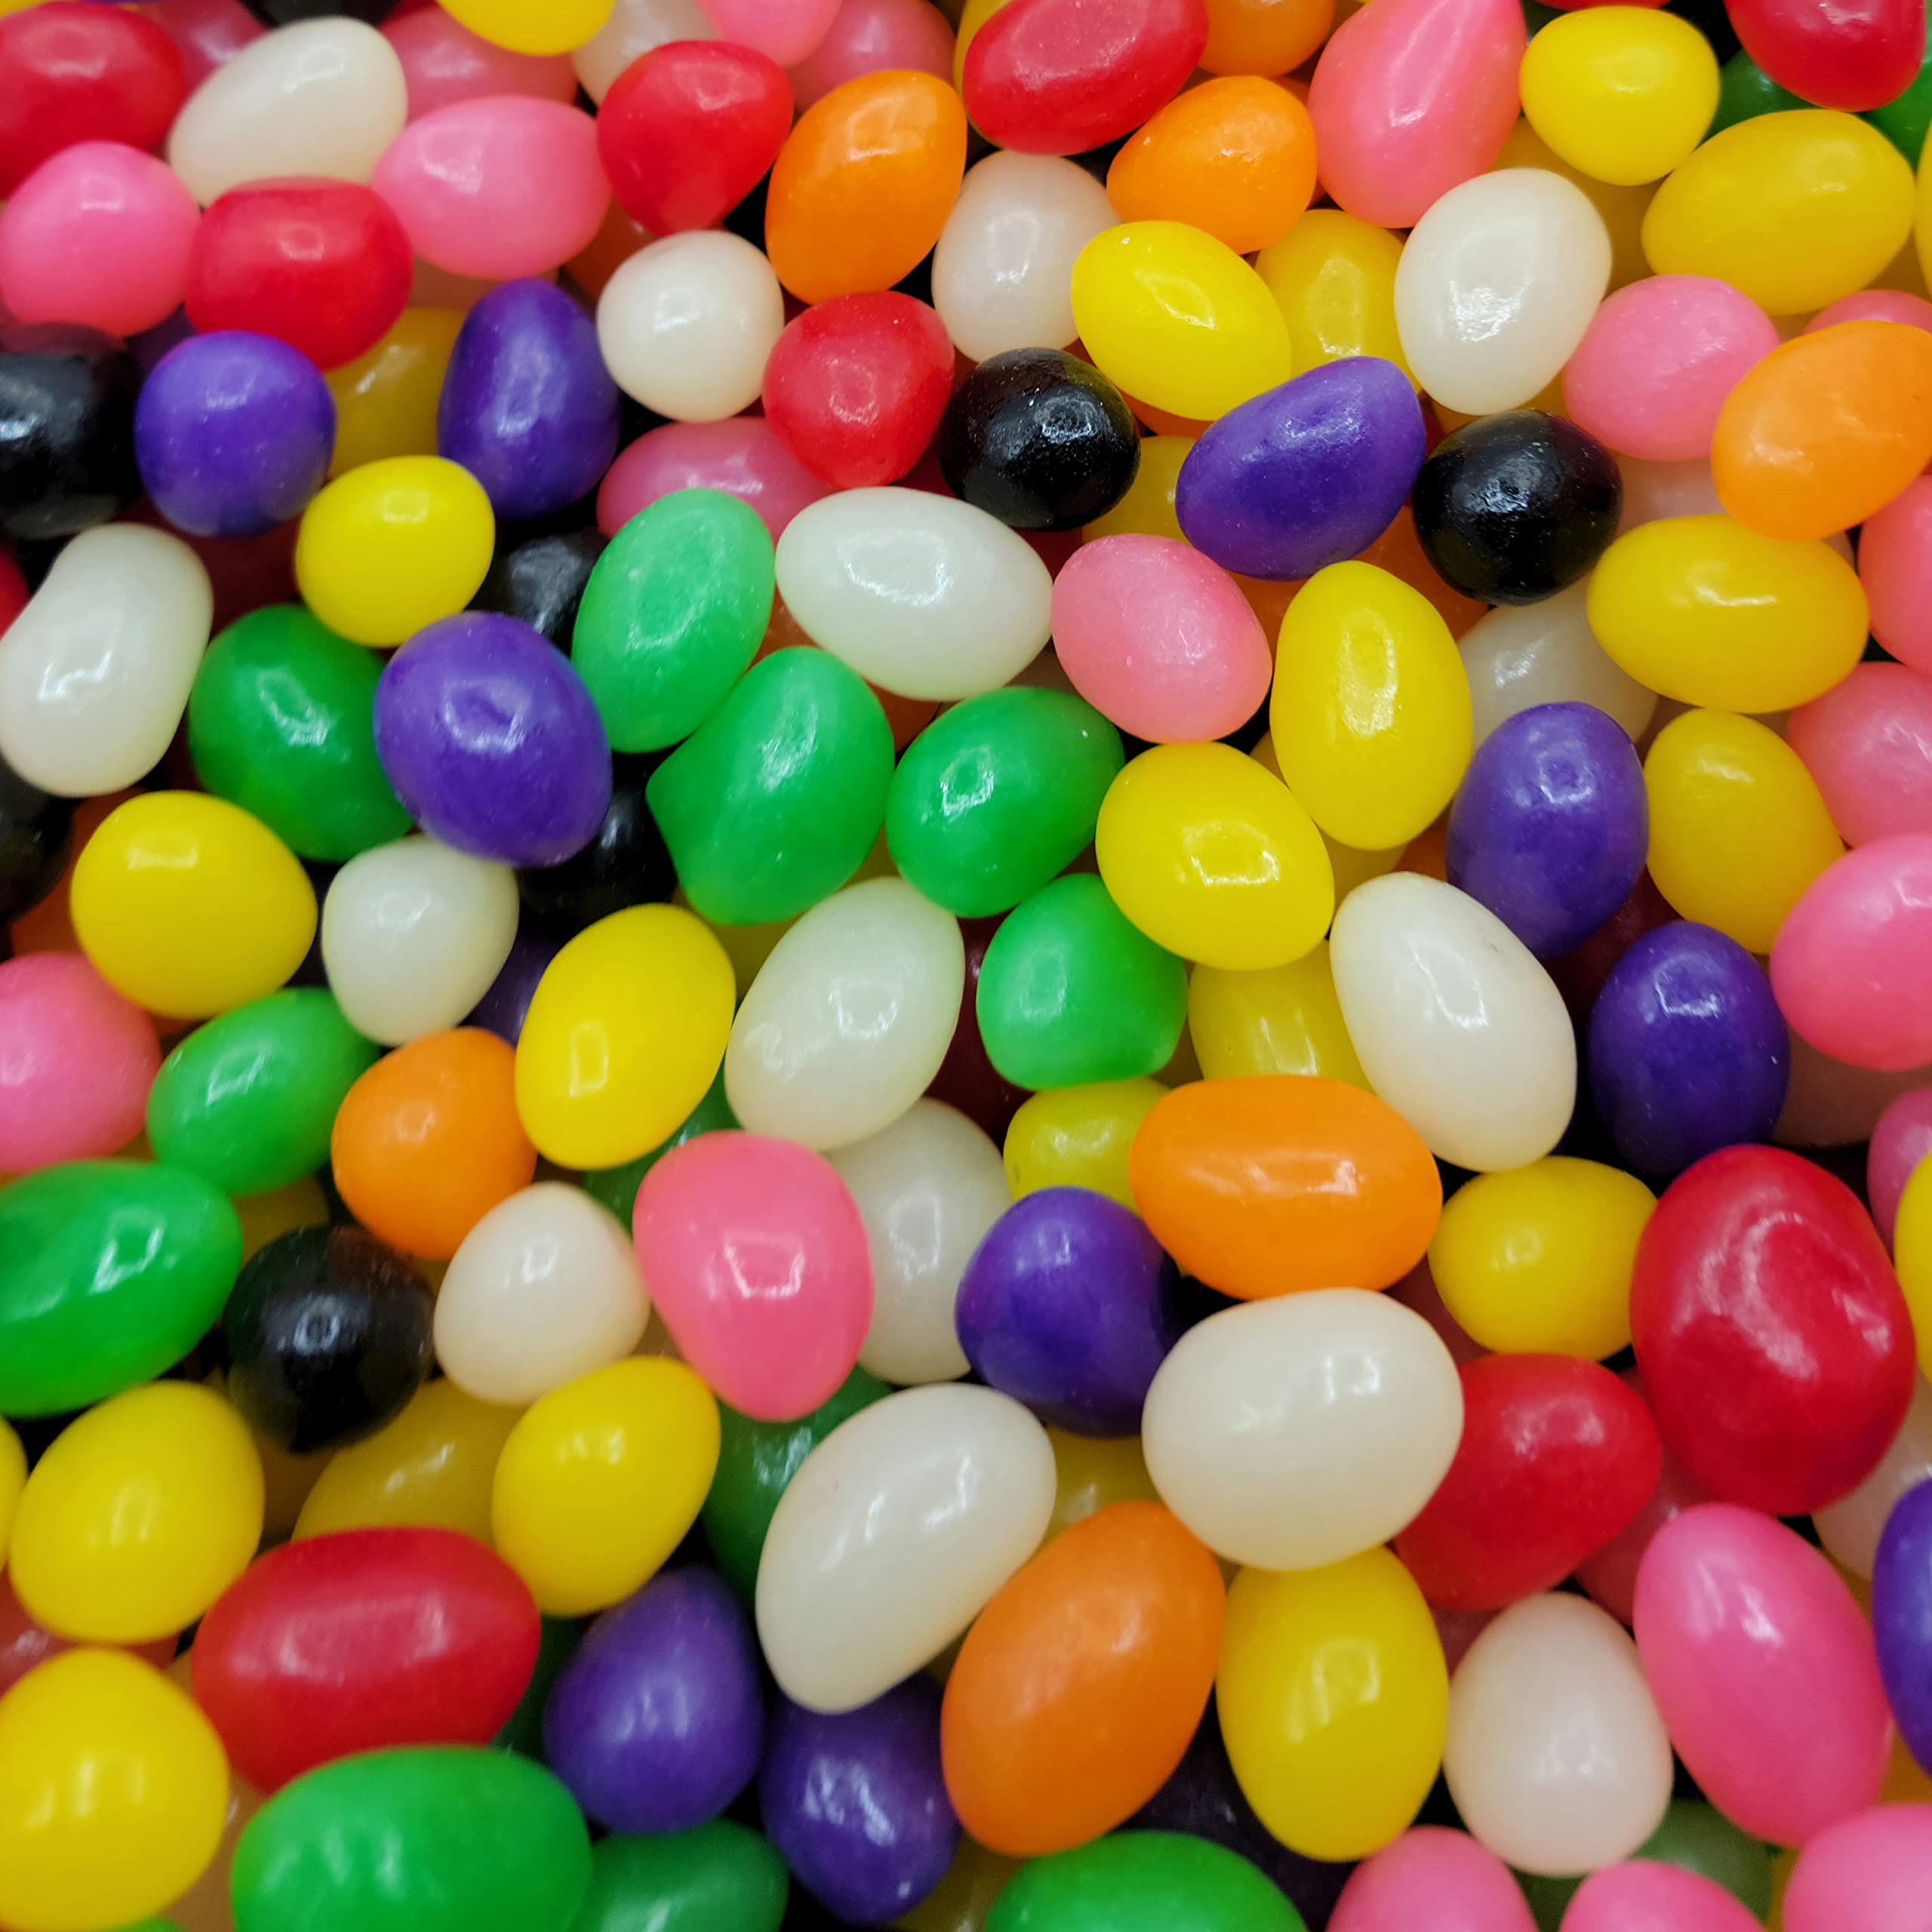 Bulk Candy > Candy by Brand > Brach's